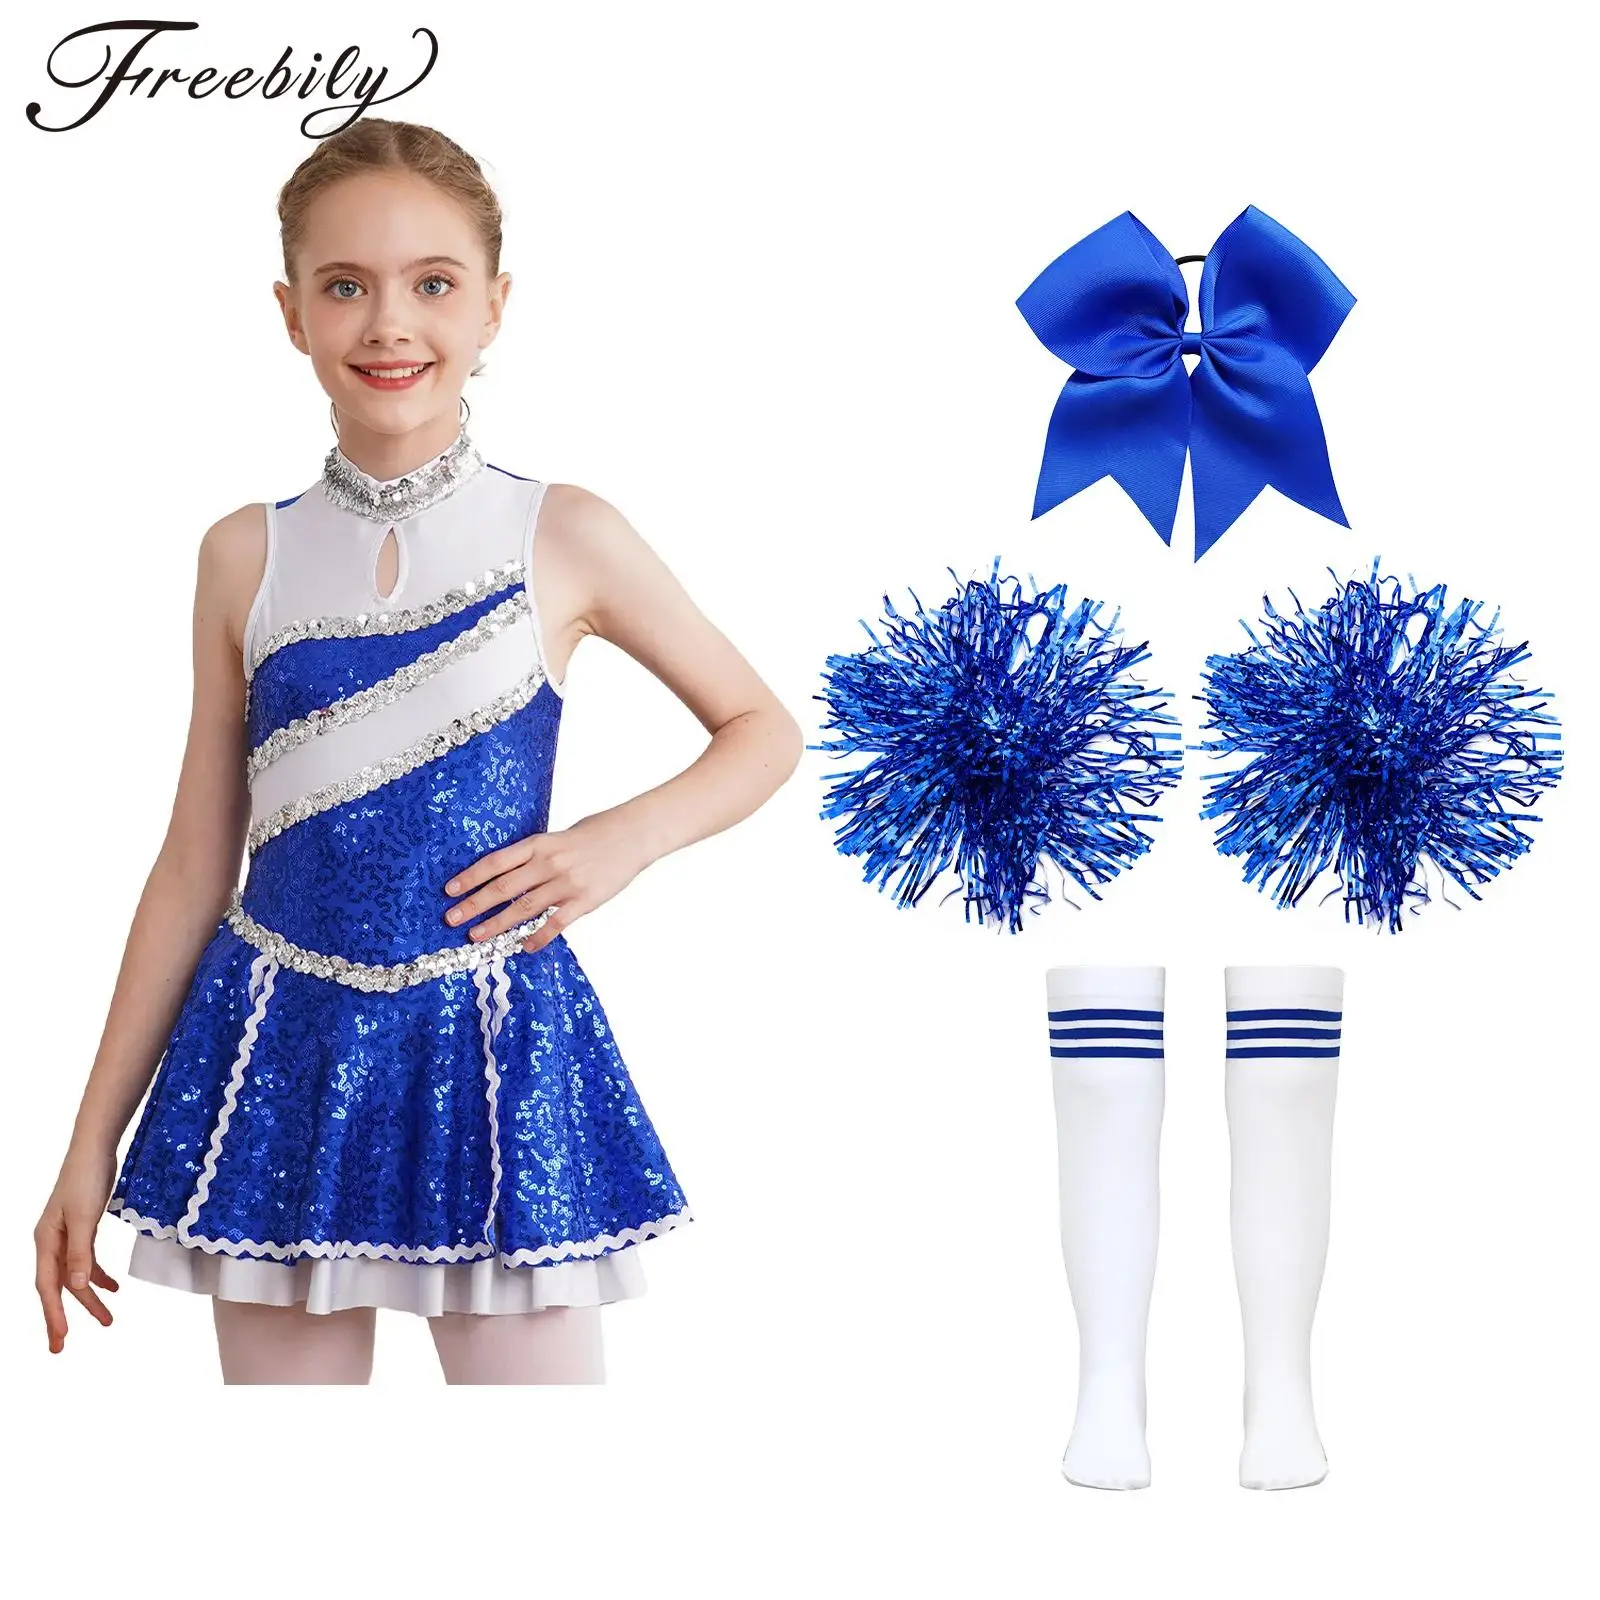 

High School Cheerleader Costume Sets for Kids Girls Halloween Cheer Uniform Dance Competition Team Sports Cheerleading Dress Up